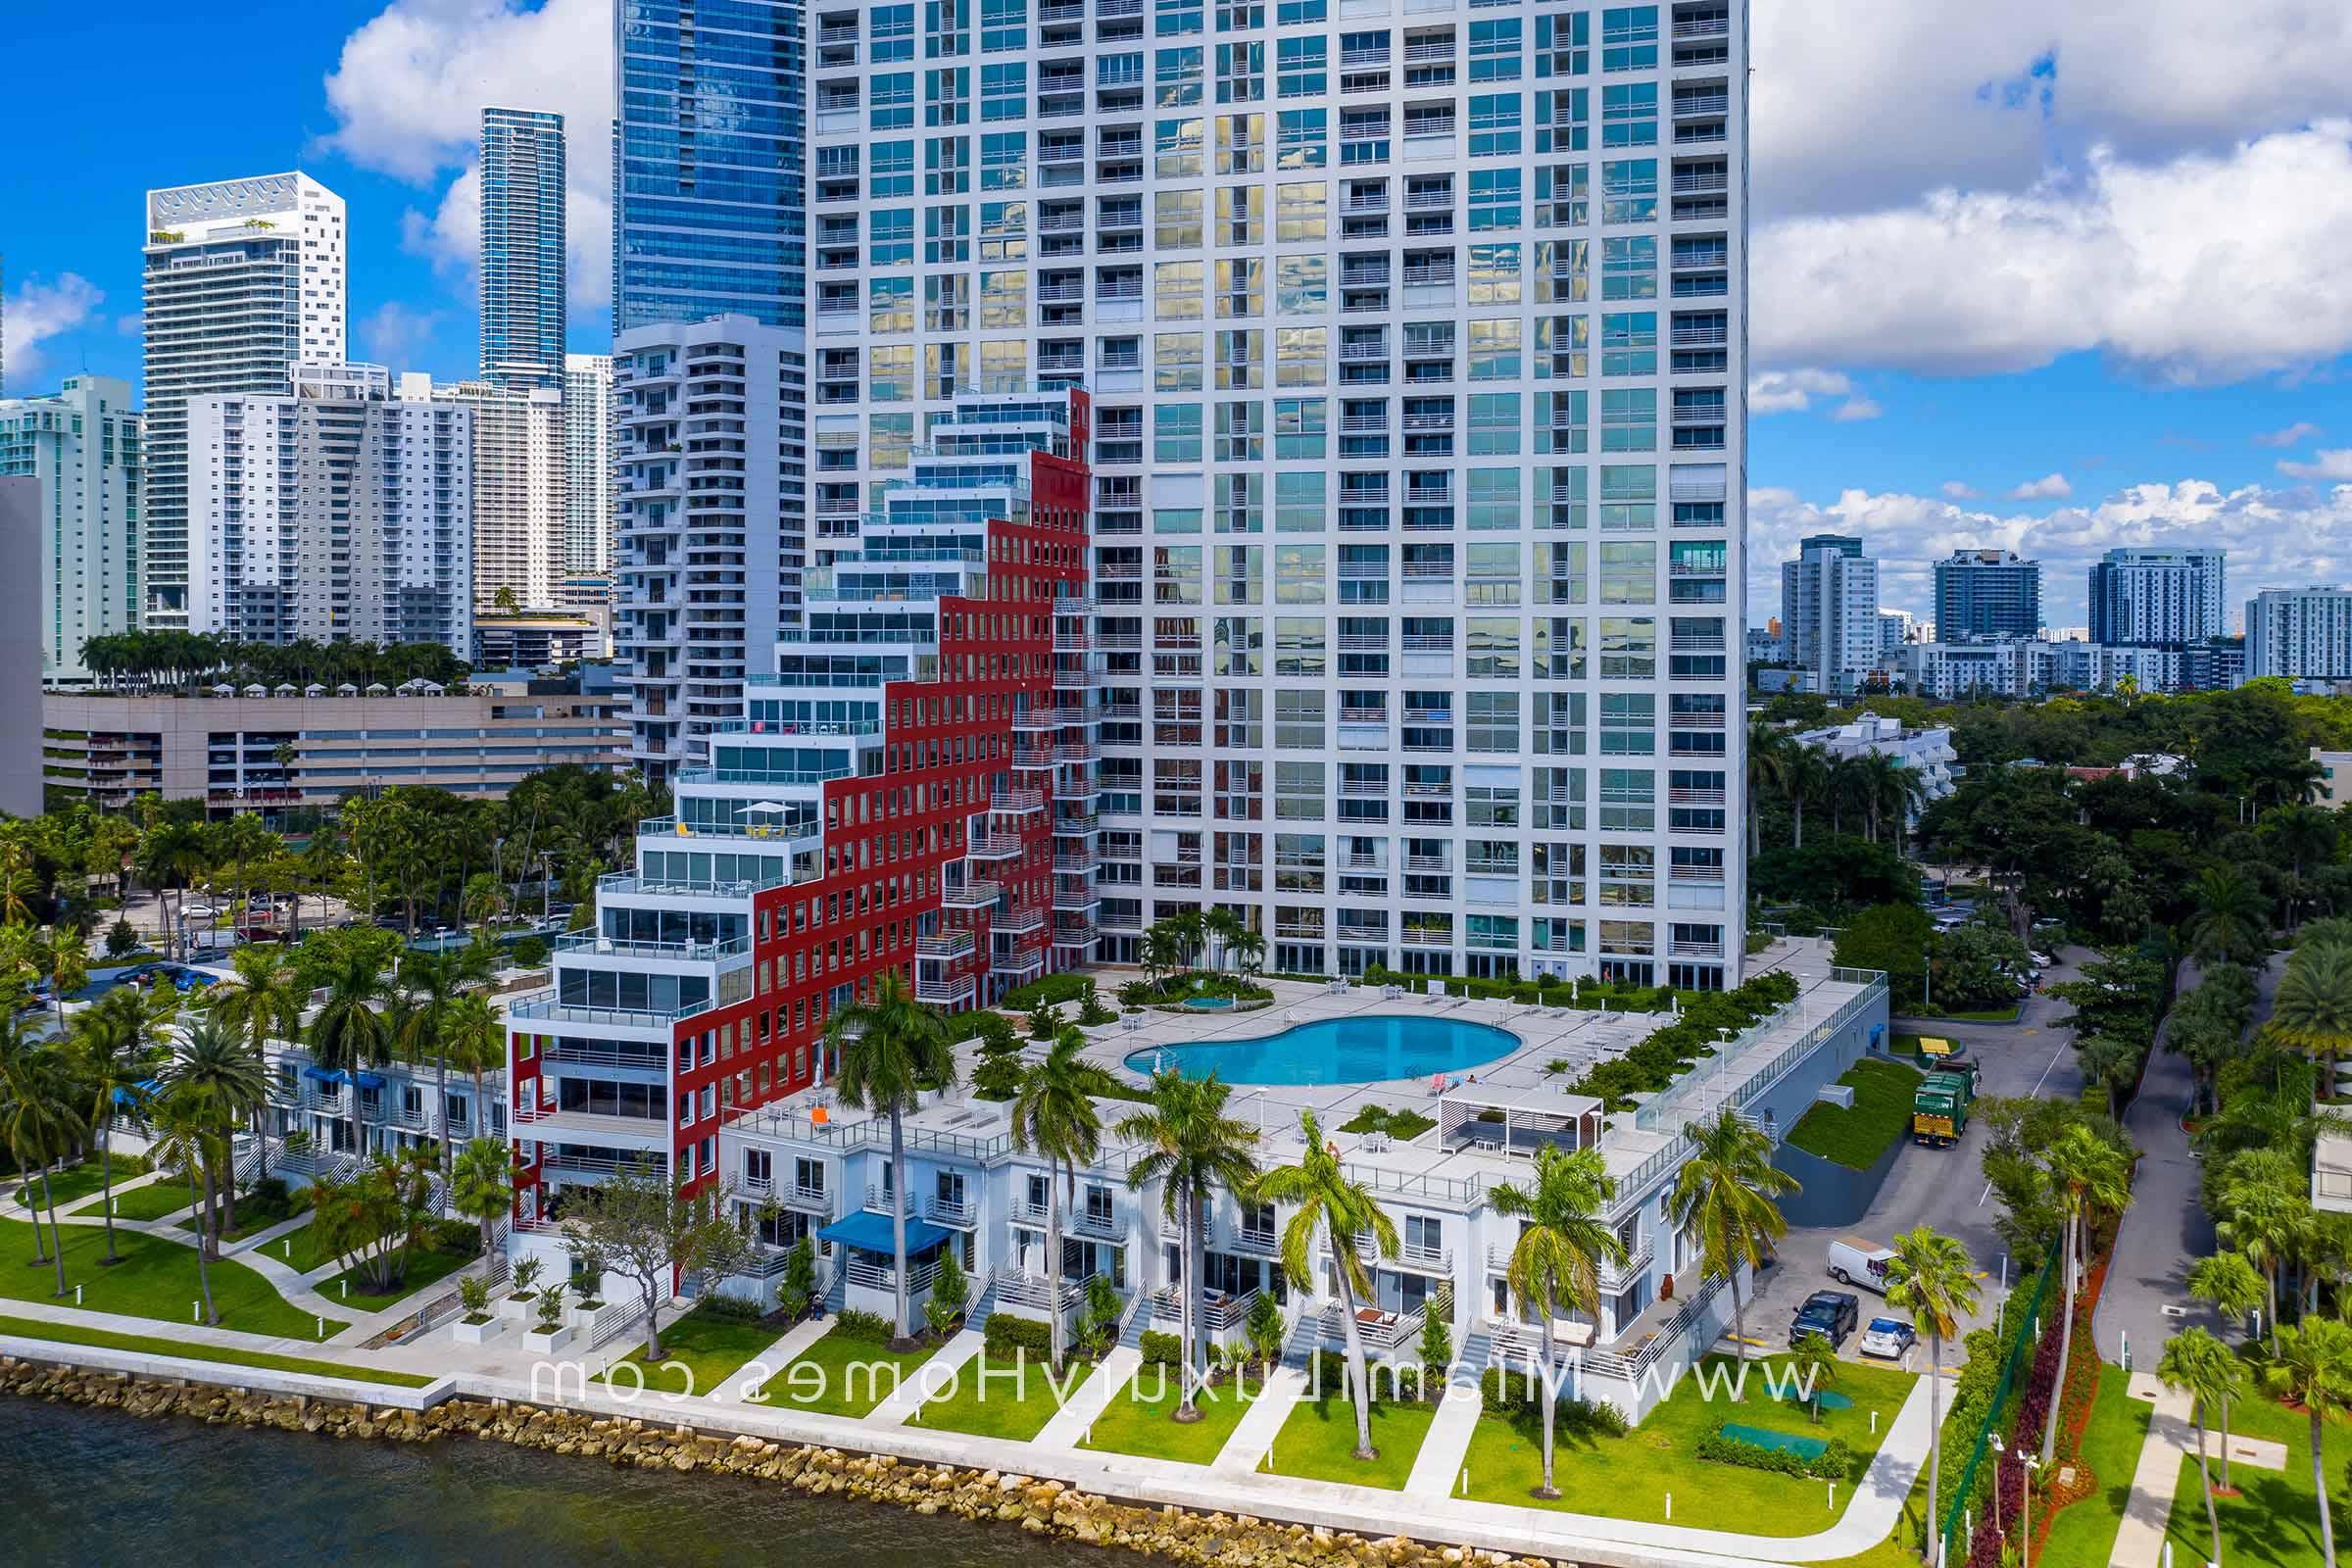 The Palace Condos in Miami